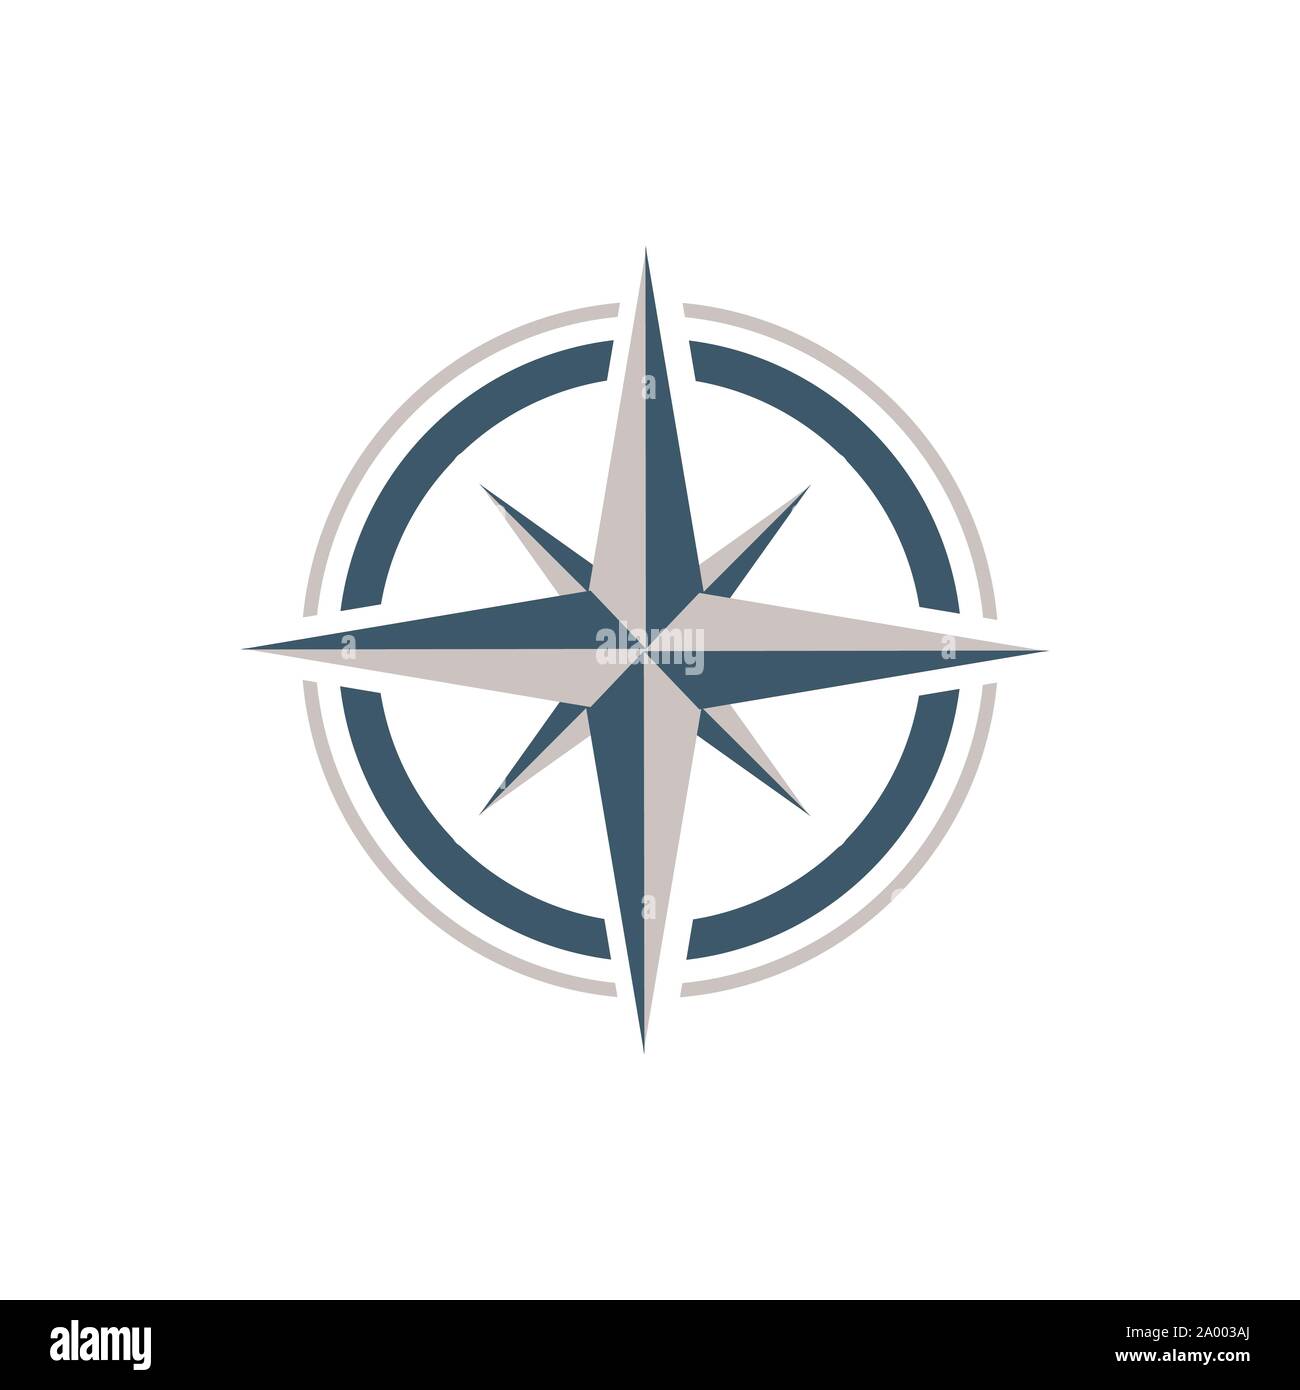 Stilvoll kreative Kompass Logo Design Konzept Design vektor Icon Vorlage  Stock-Vektorgrafik - Alamy